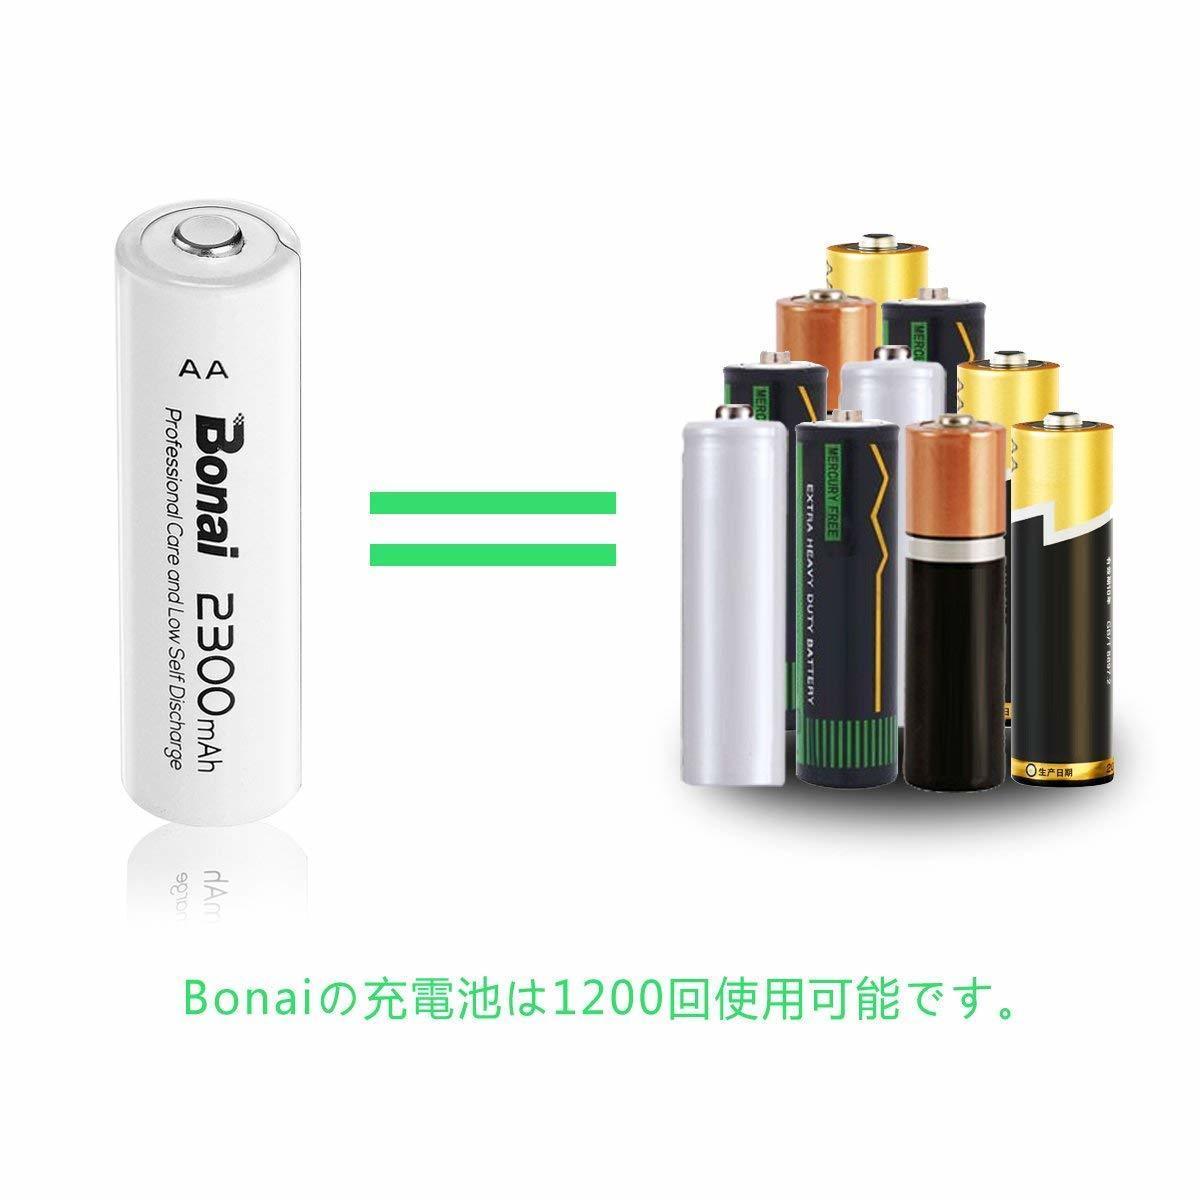 [新品/送料無料] Bonai 単3形 充電池 充電式ニッケル水素電池 24個パック PSE/CE取得 UL認証済み（高容量2300mAh 約1200回使用可能）_画像2